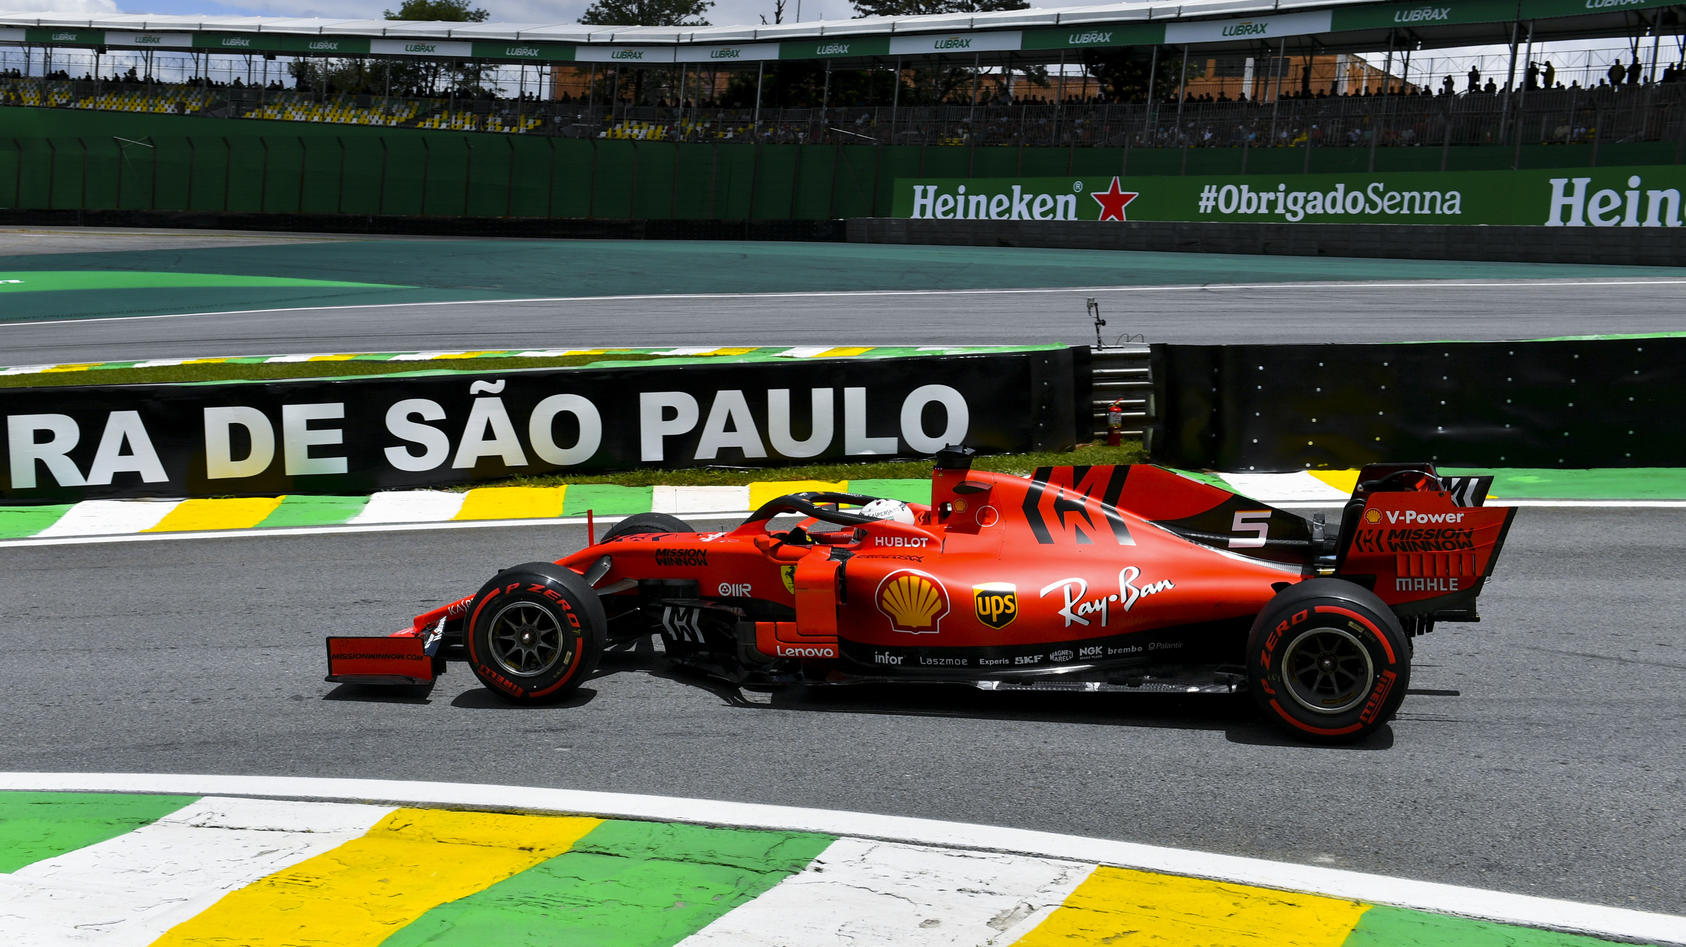 2019 Brazilian GP SAO PAULO, BRAZIL - NOVEMBER 16: Sebastian Vettel, Ferrari SF90 during the 2019 Formula One Brazilian